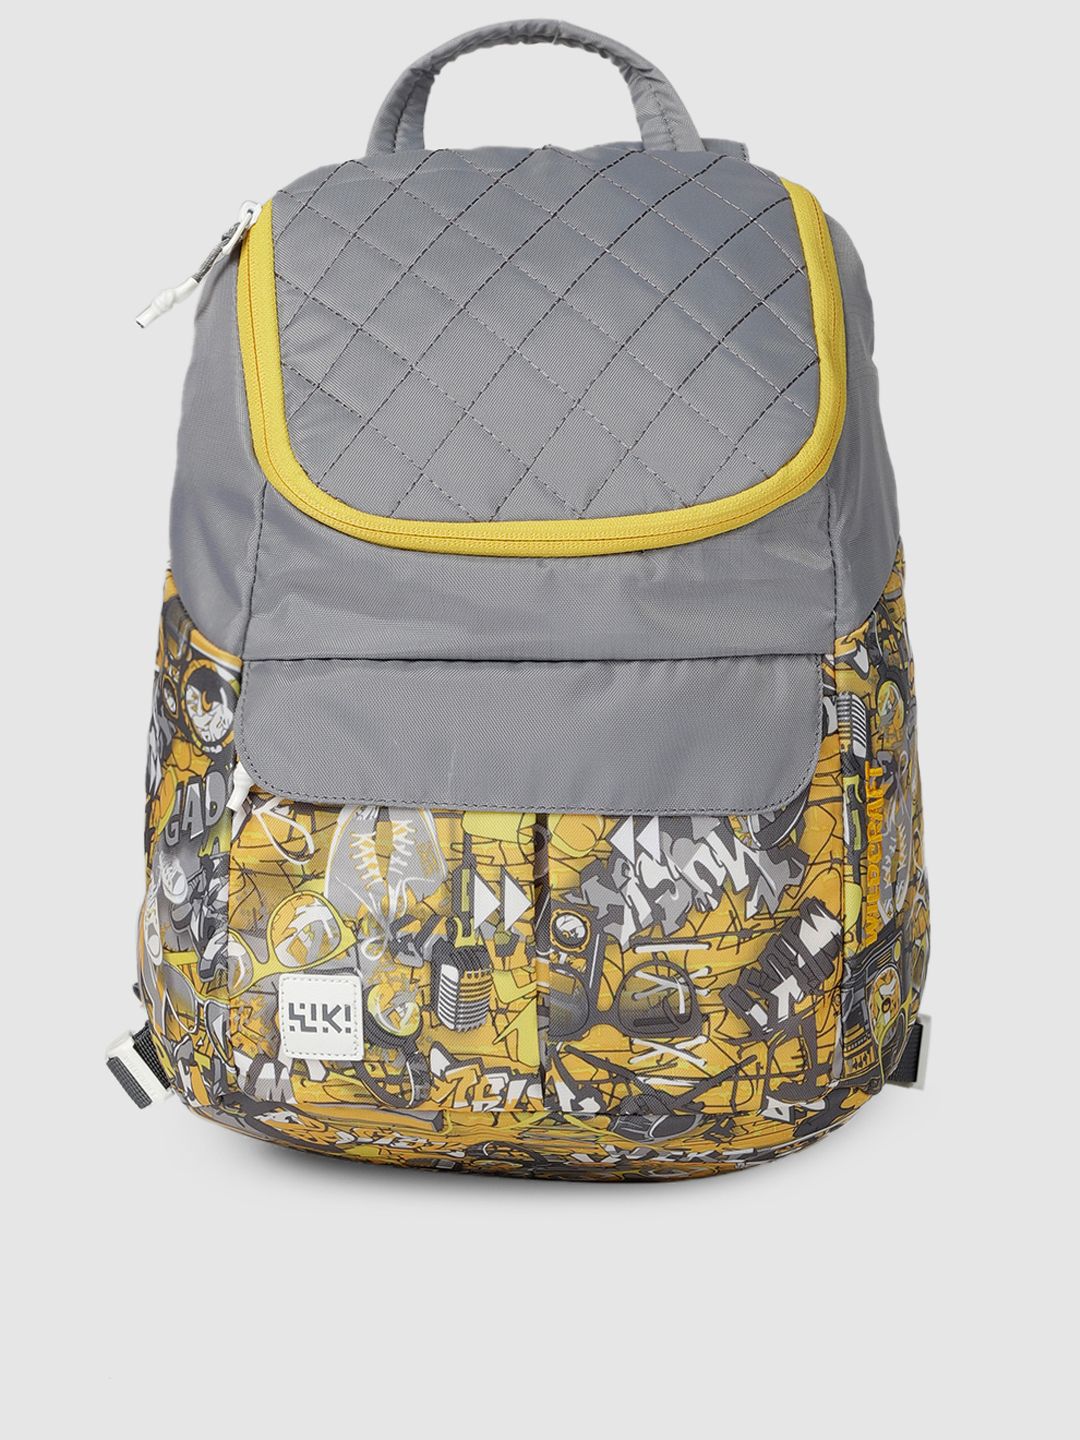 Wildcraft Women Yellow & Grey Graphic Backpack Price in India